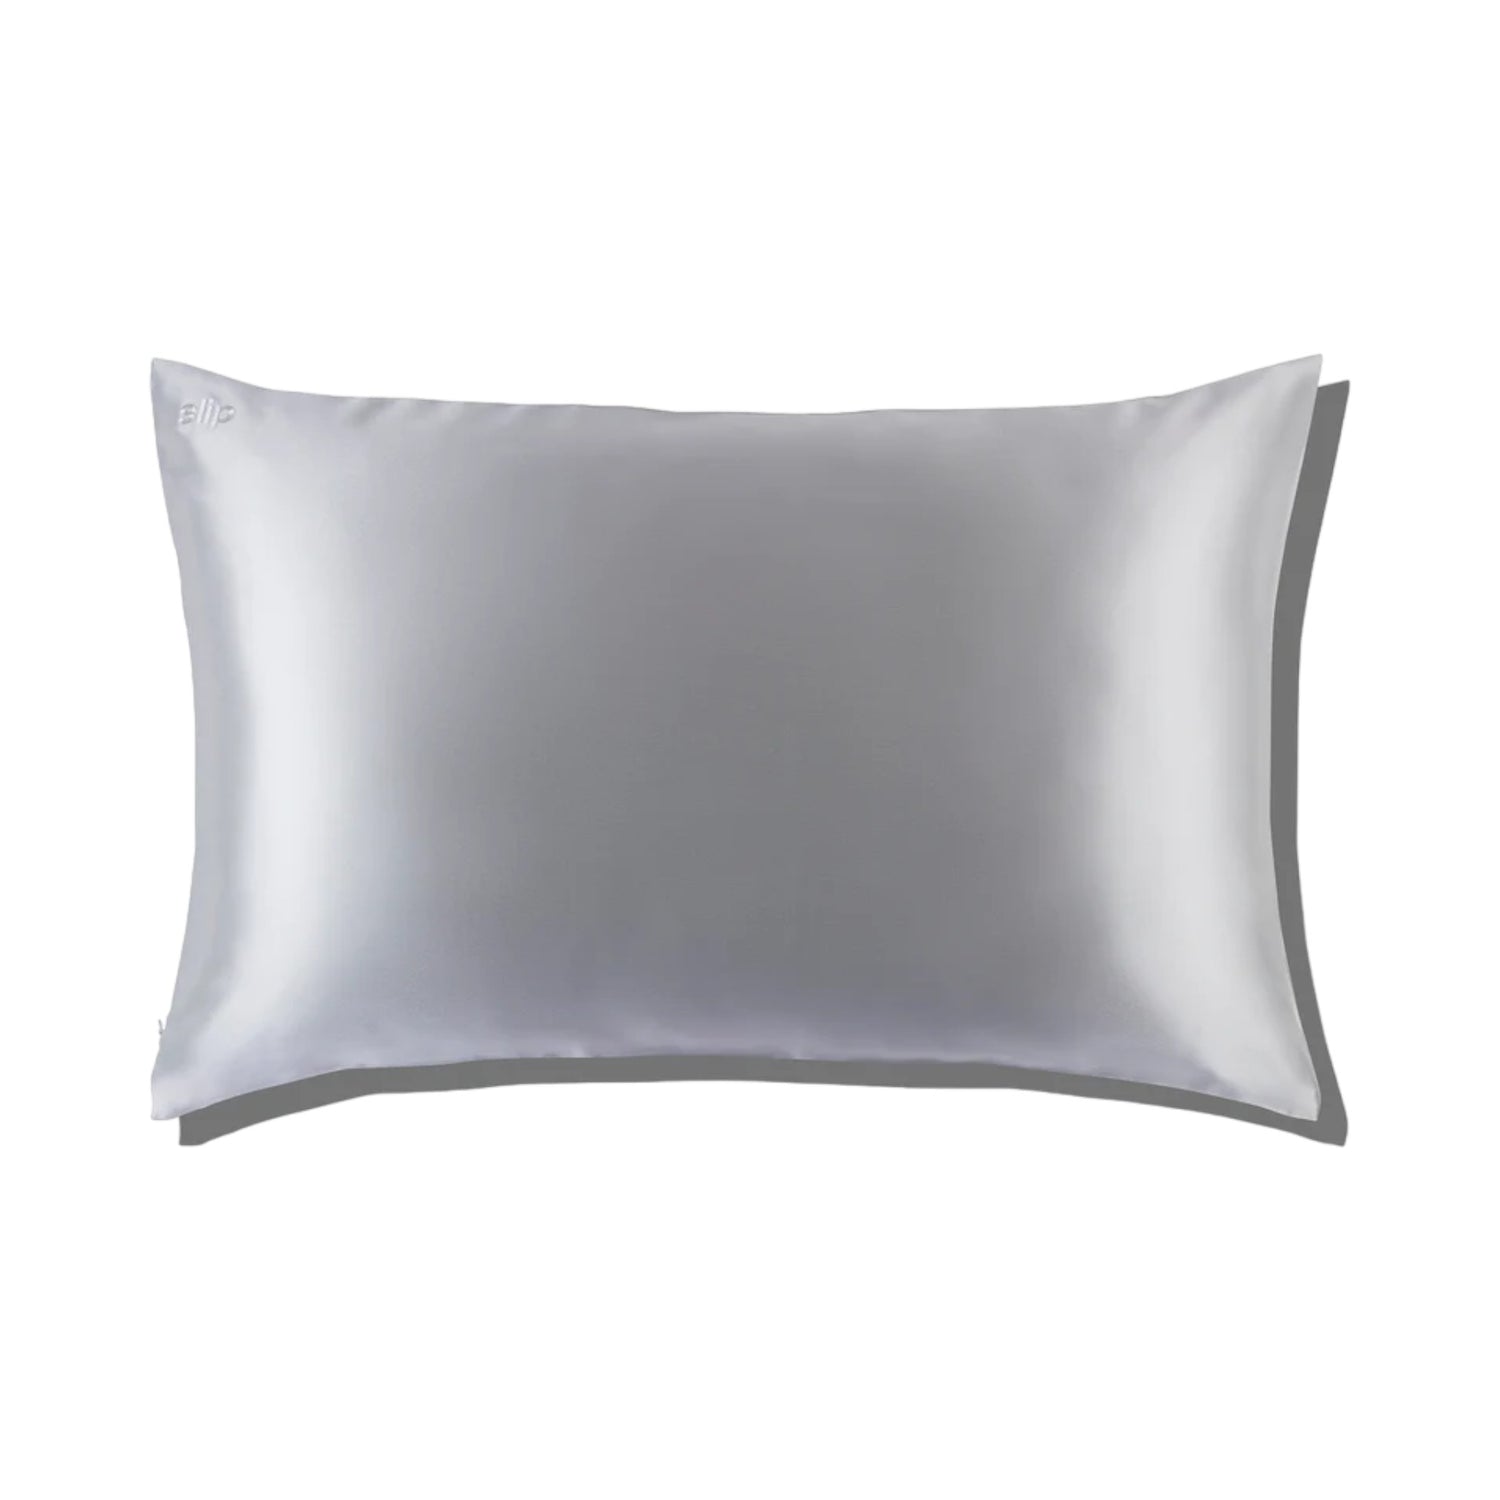 Pure Silk Pillowcases Queen - Silver